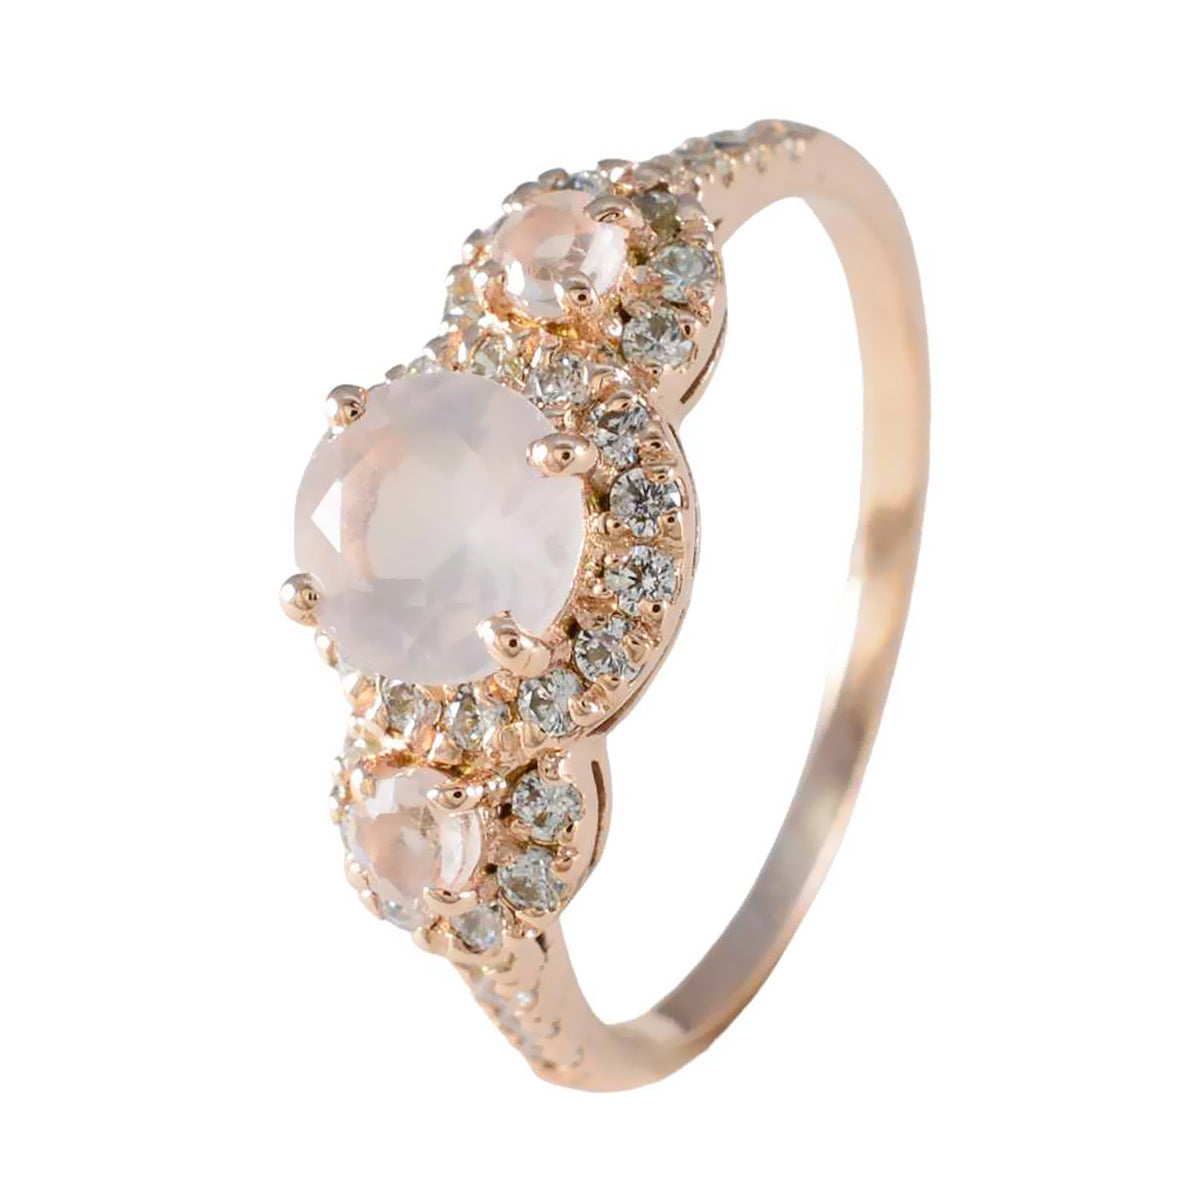 Riyo Jewelry Silver Ring With Rose Gold Plating Rose Quartz Stone Round Shape Prong Setting Designer Jewelry New Year Ring